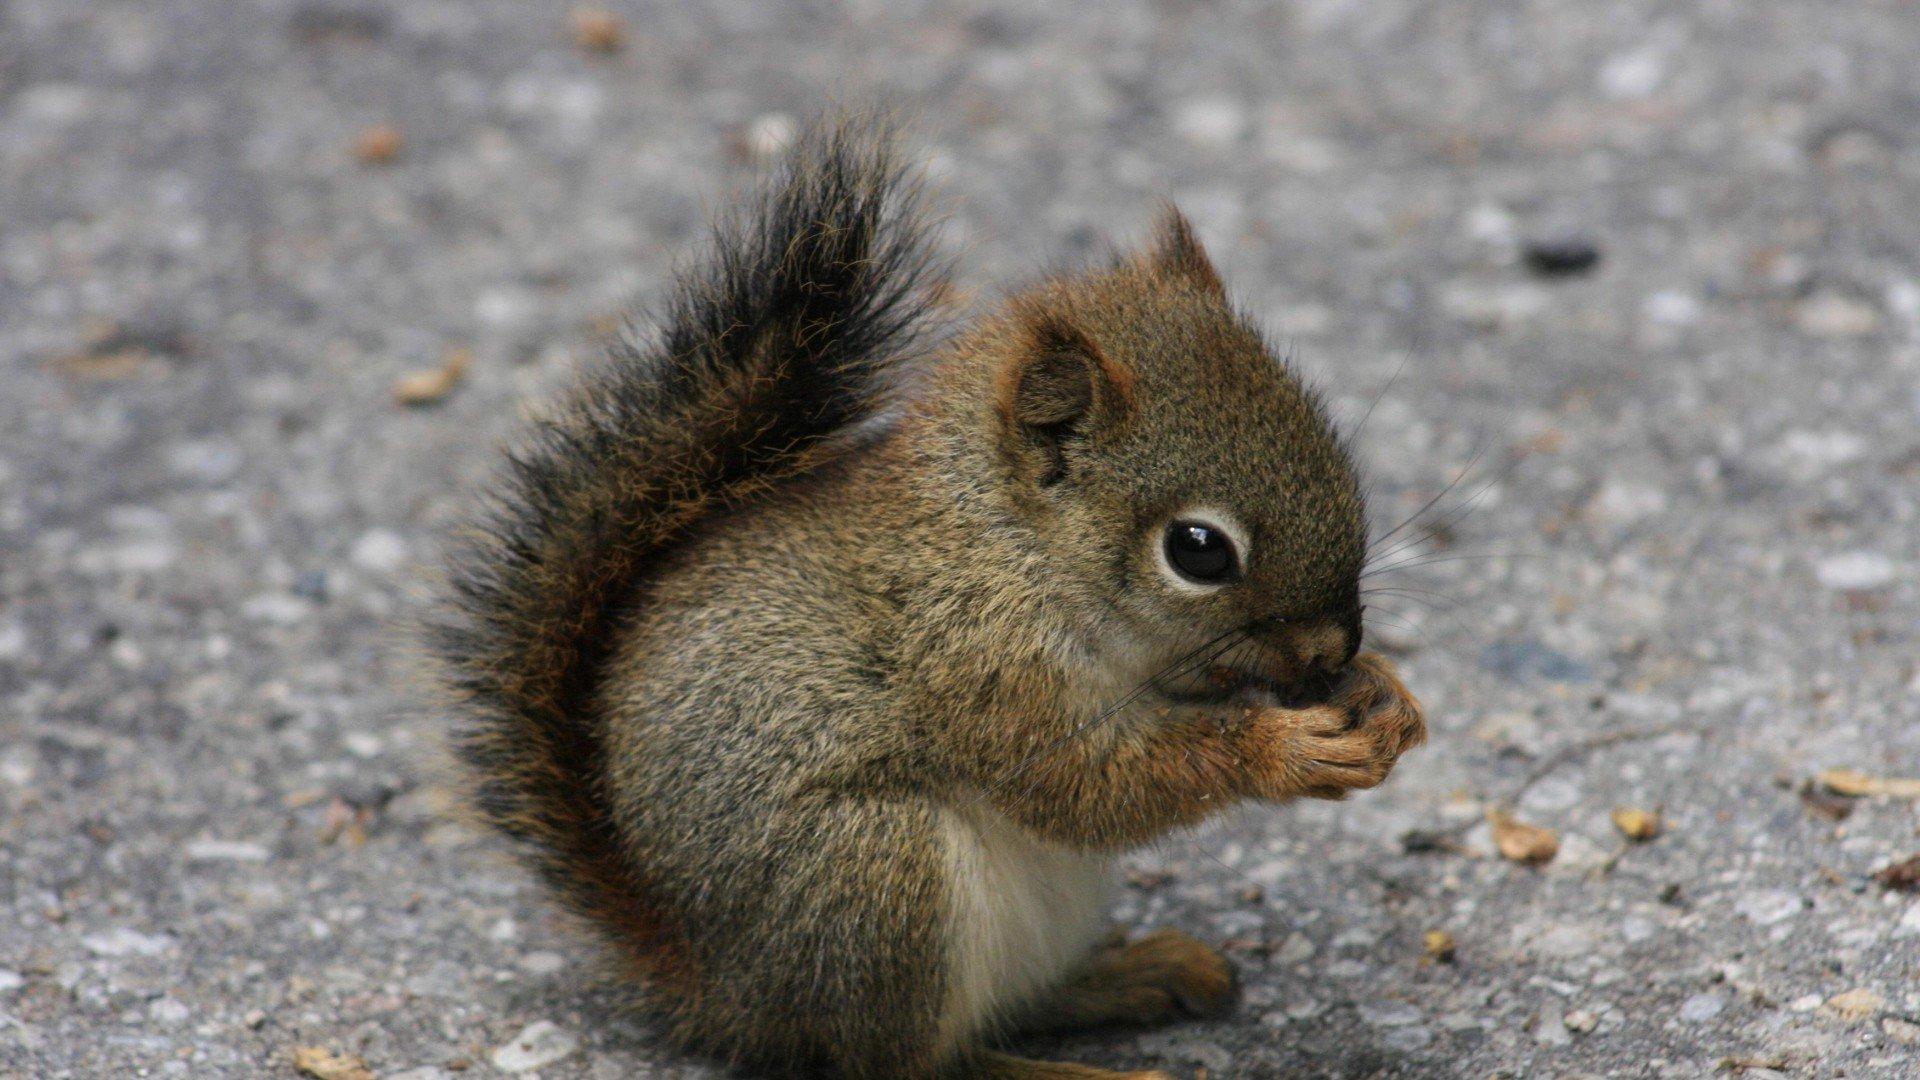 Squirrel, HD Animals, 4k Wallpaper, Image, Background, Photo